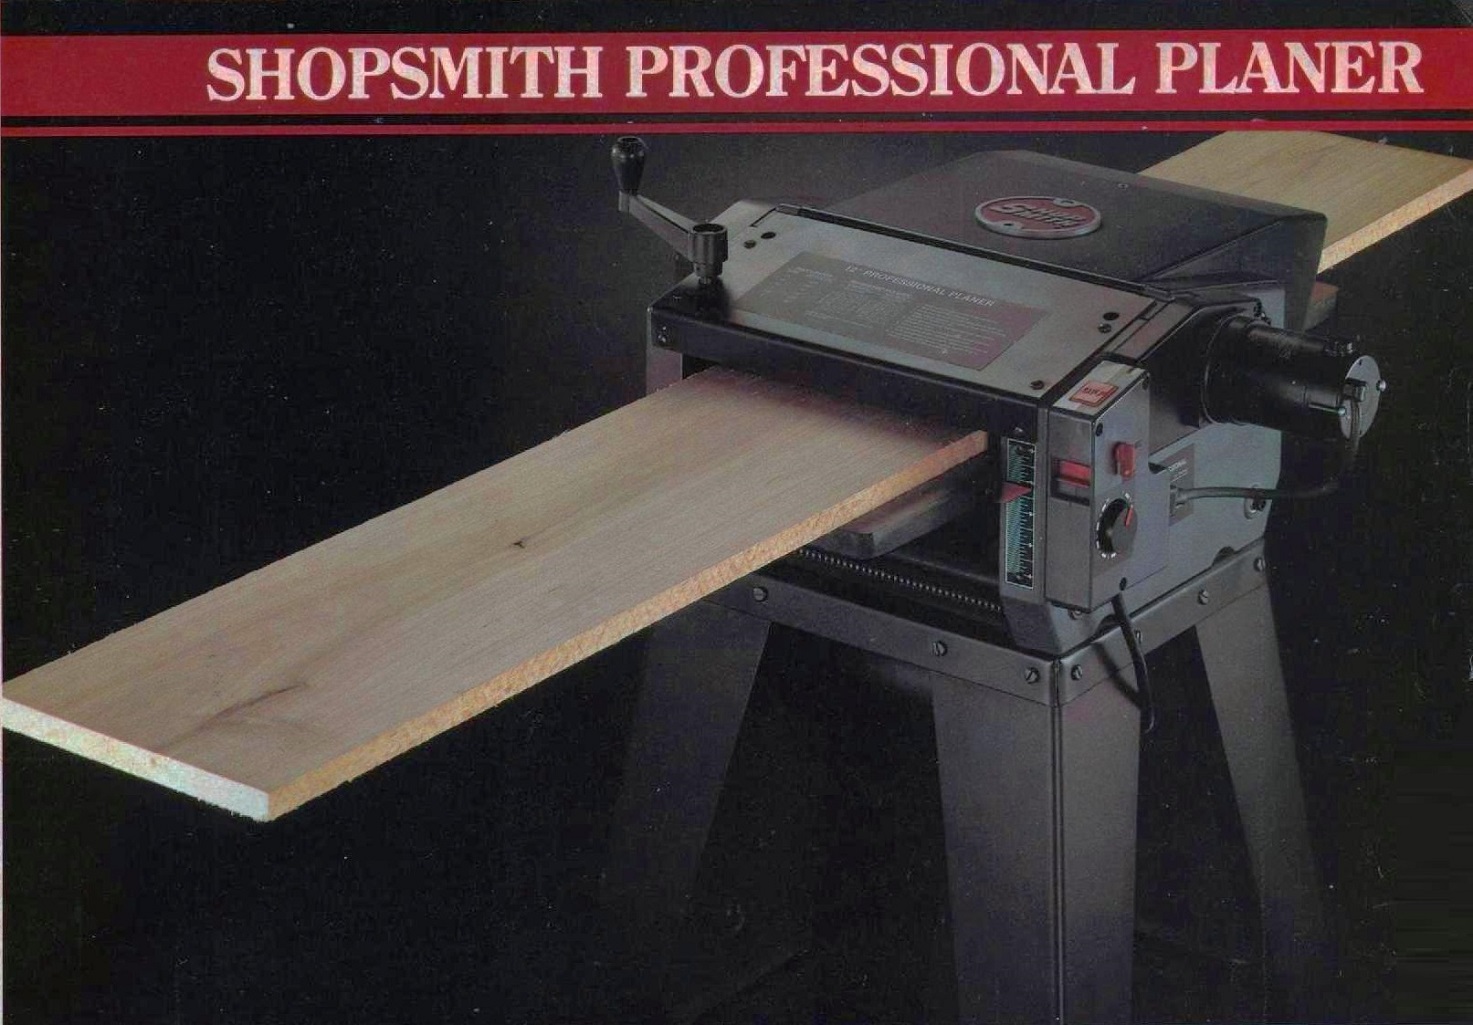 3rd Shopsmith Professional Planer Cast Iron Bed Power Feed 555082 [1989] Everett.jpeg